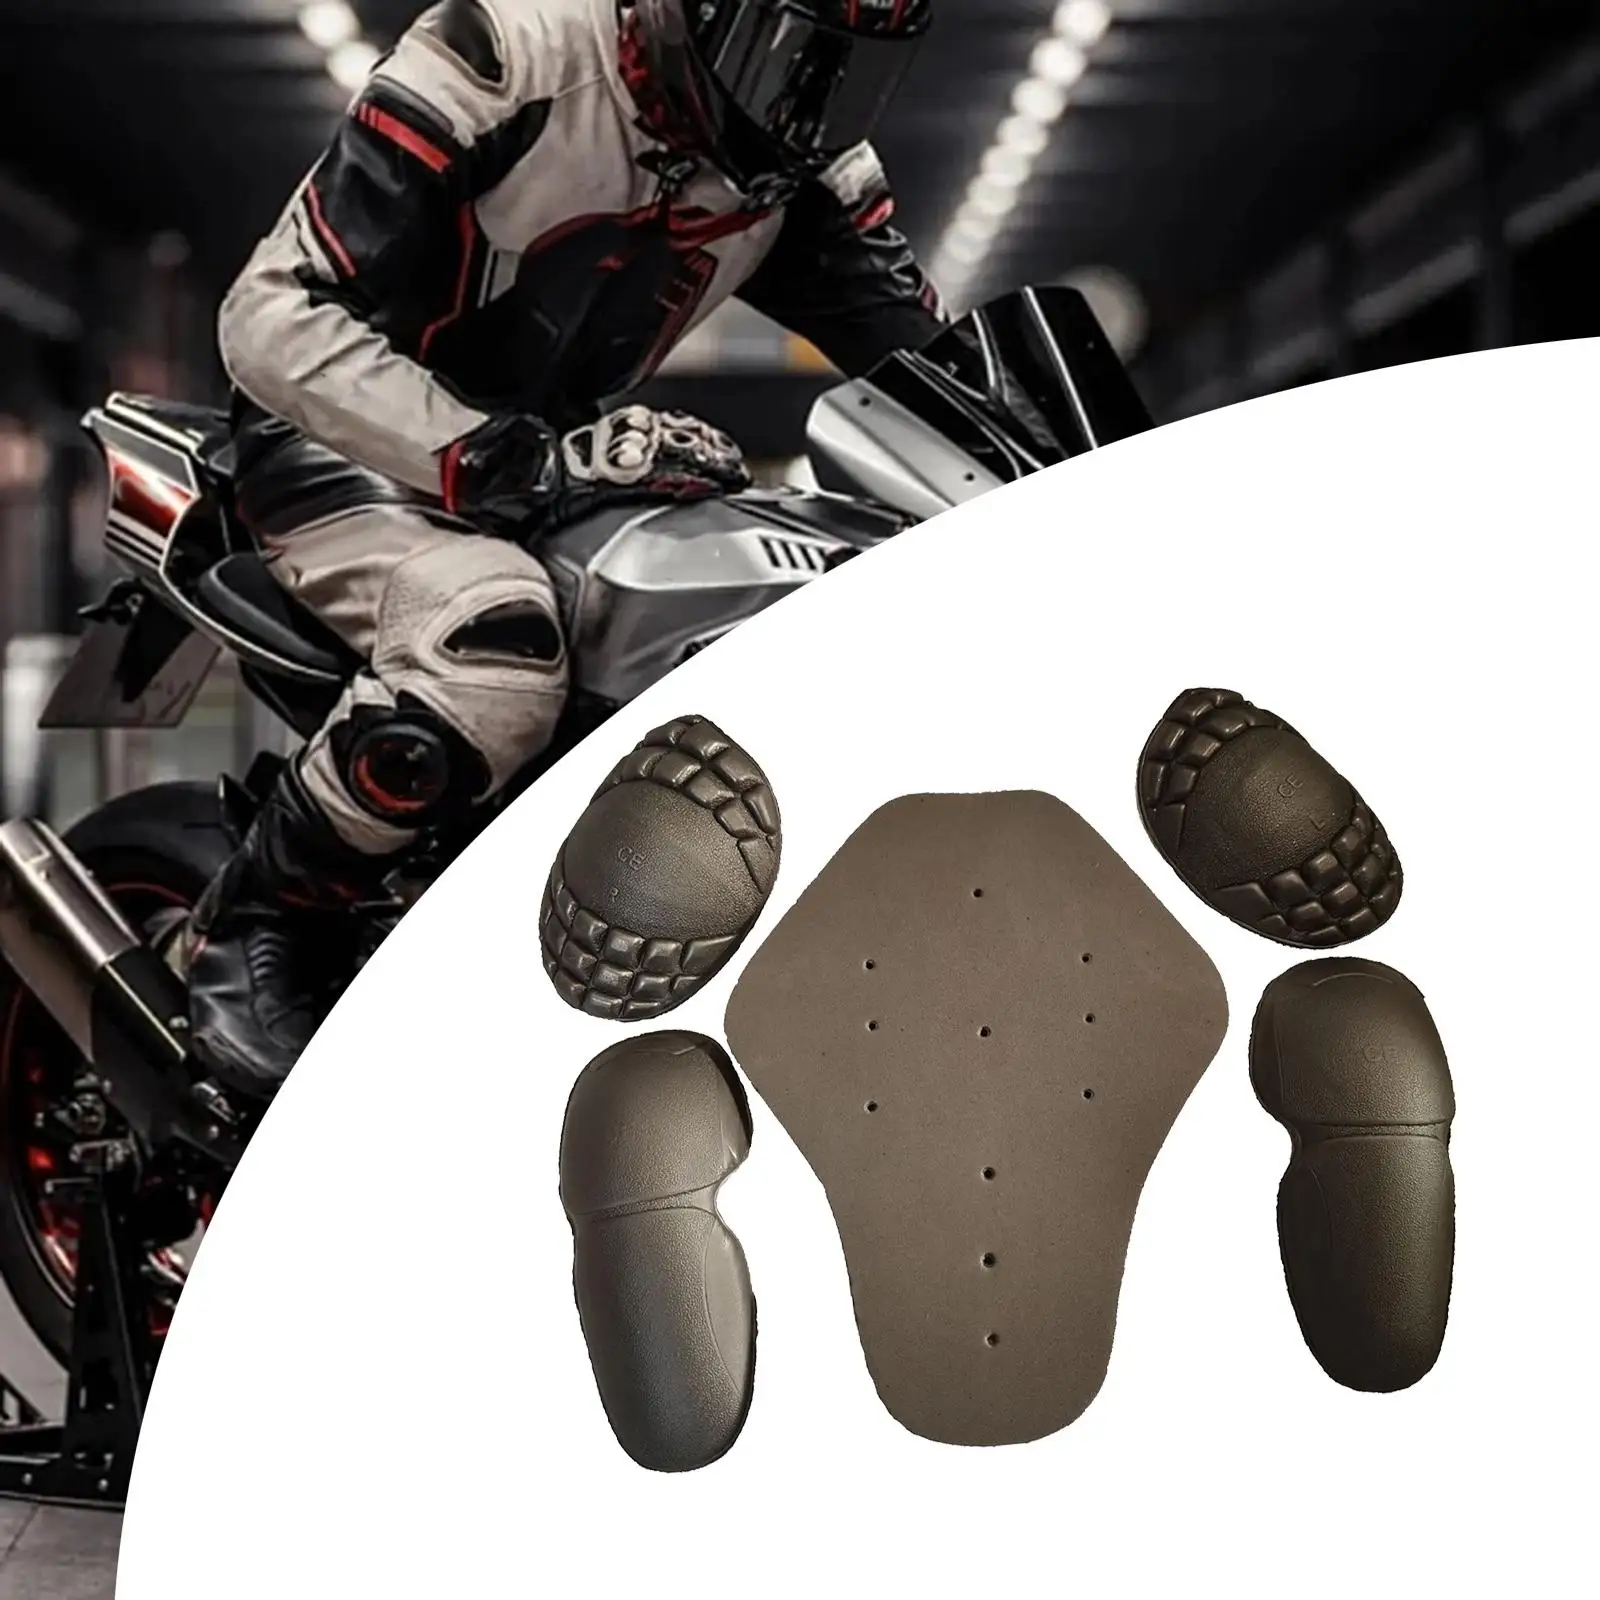 

5Pcs Motorbike Body Protective Gear Knee Pads Durable Comfortable EVA Breathable for Cycling Sport Biker Motocross Biking